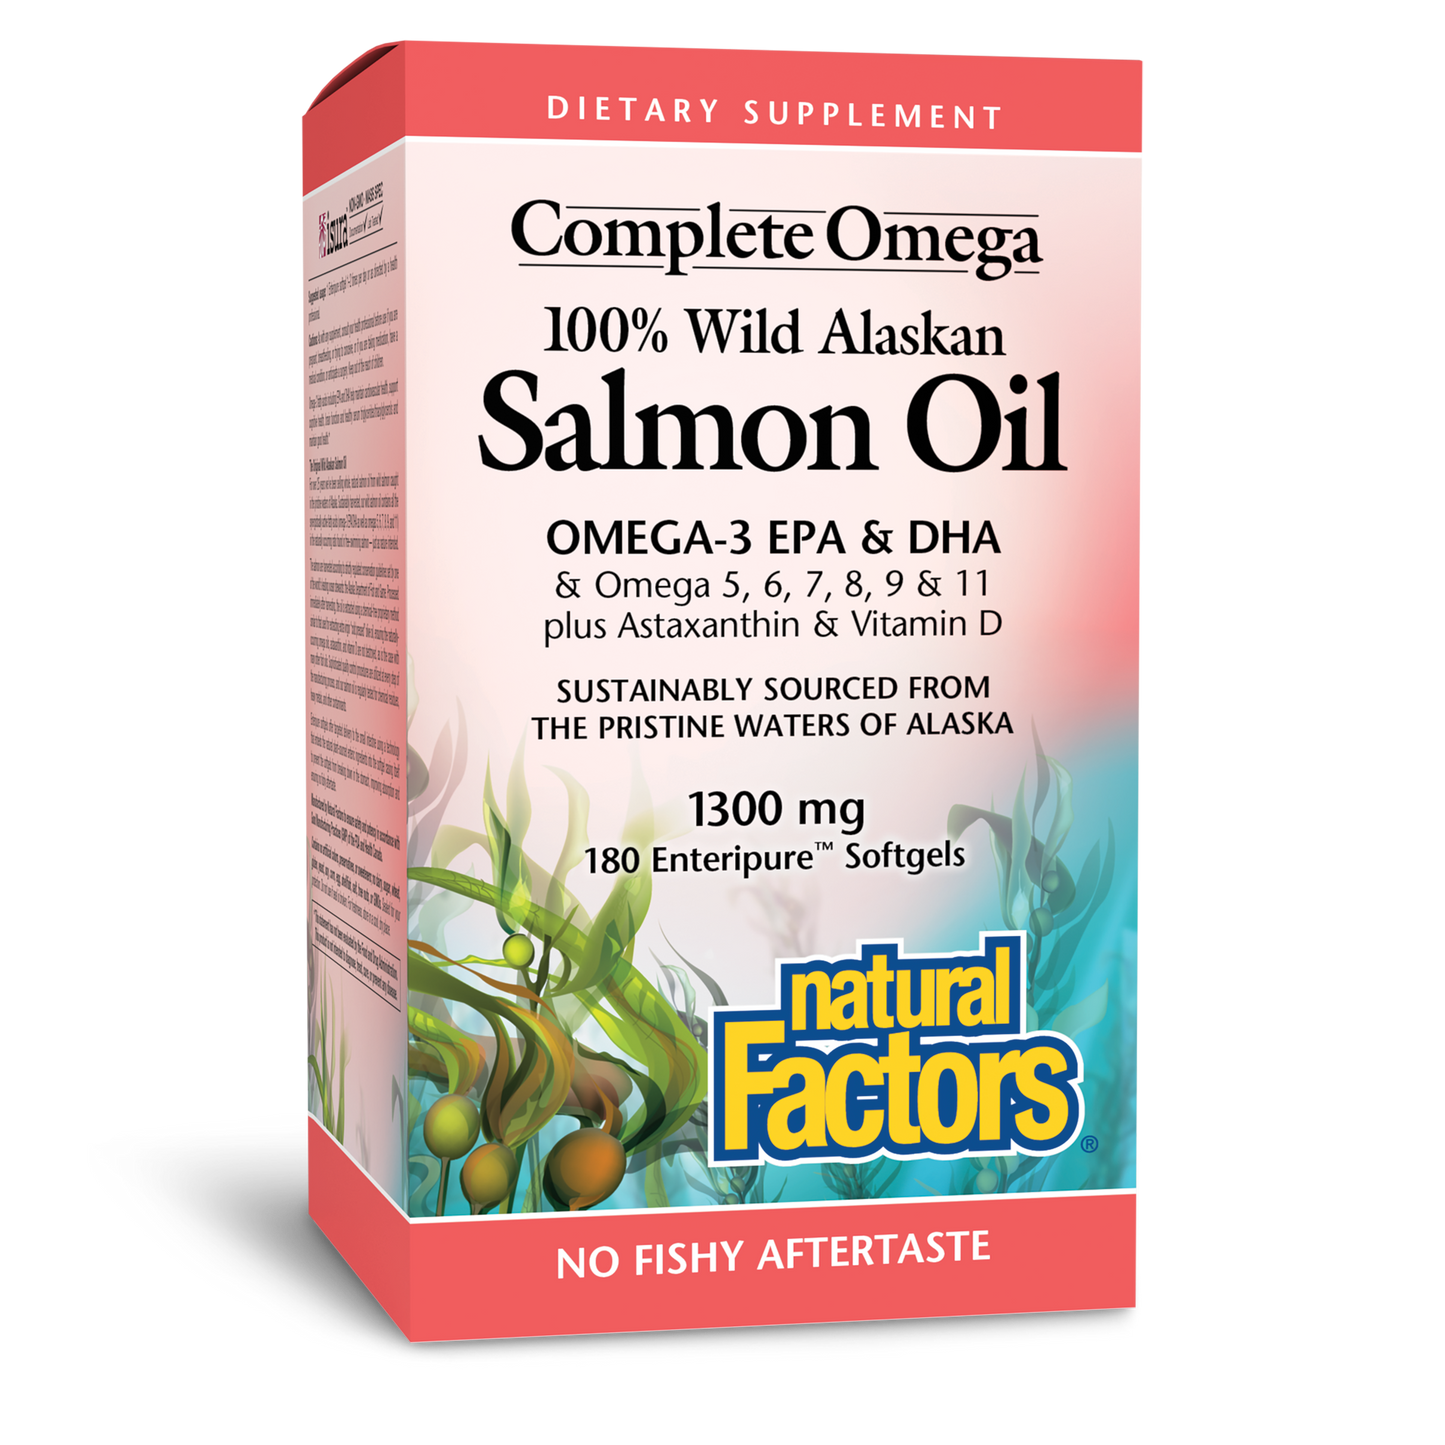 Complete Omega 100% Wild Alaskan Salmon Oil for Natural Factors |variant|hi-res|2266U